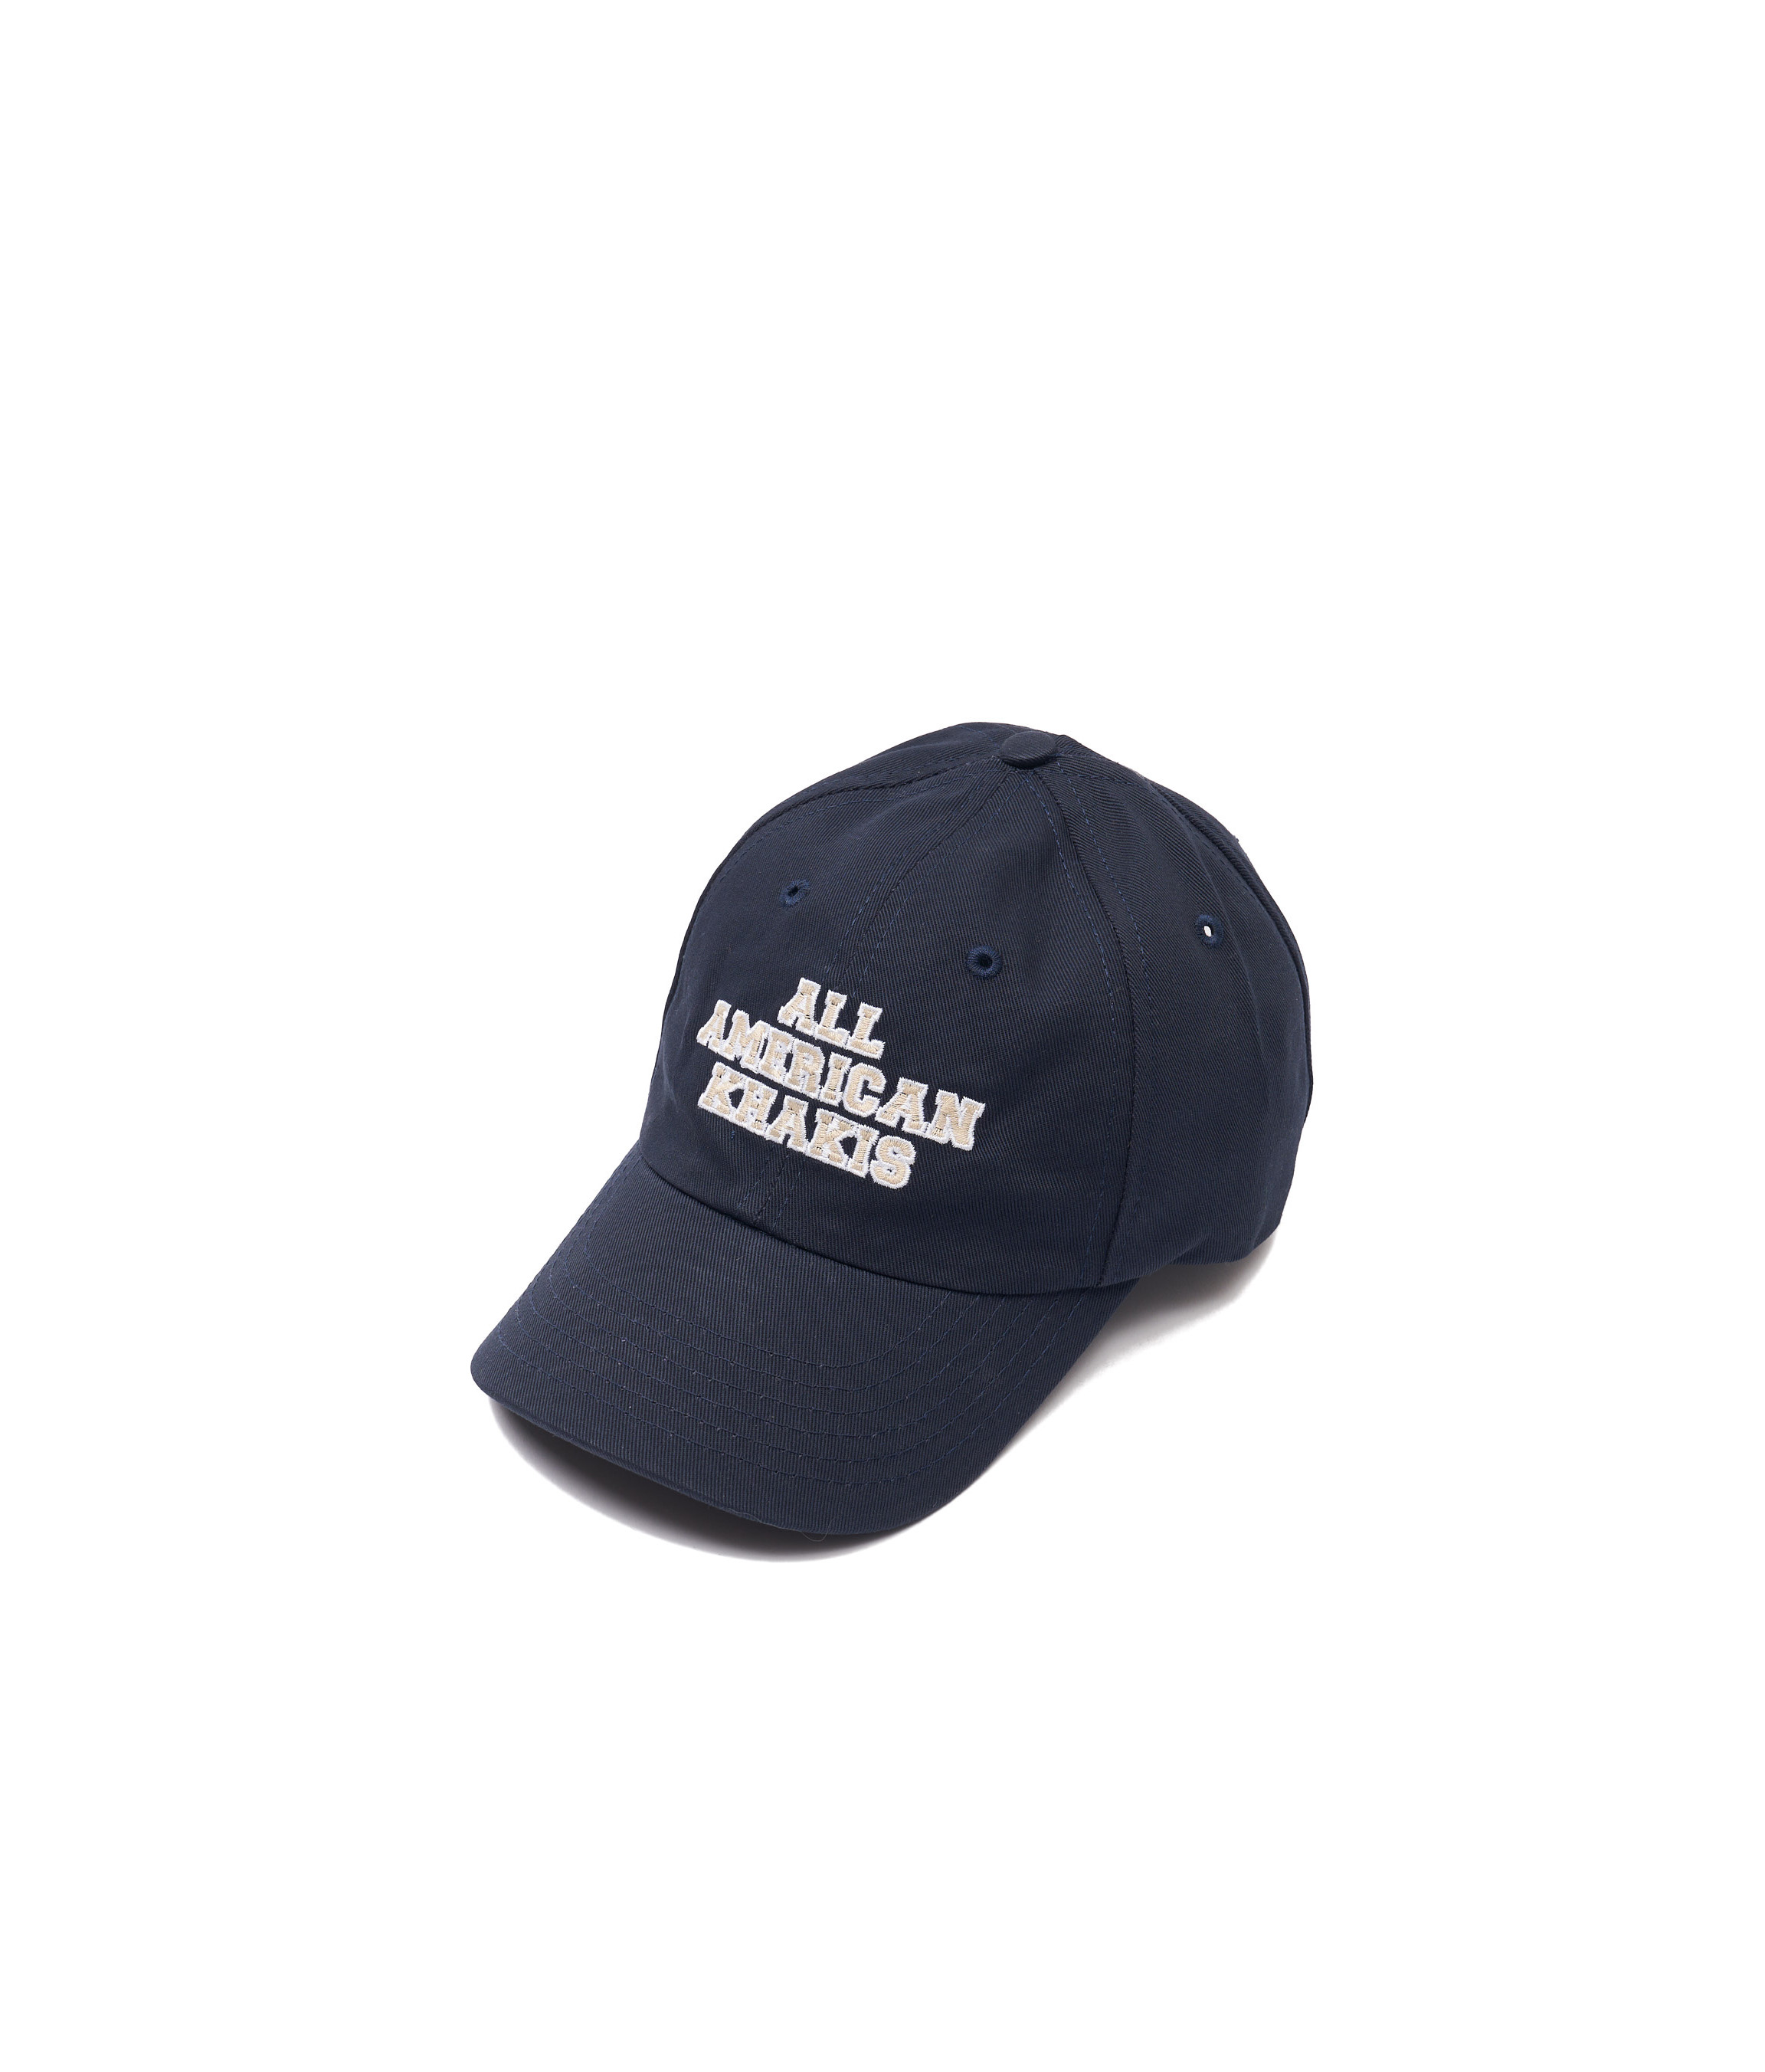 All American Khakis Hat Navy